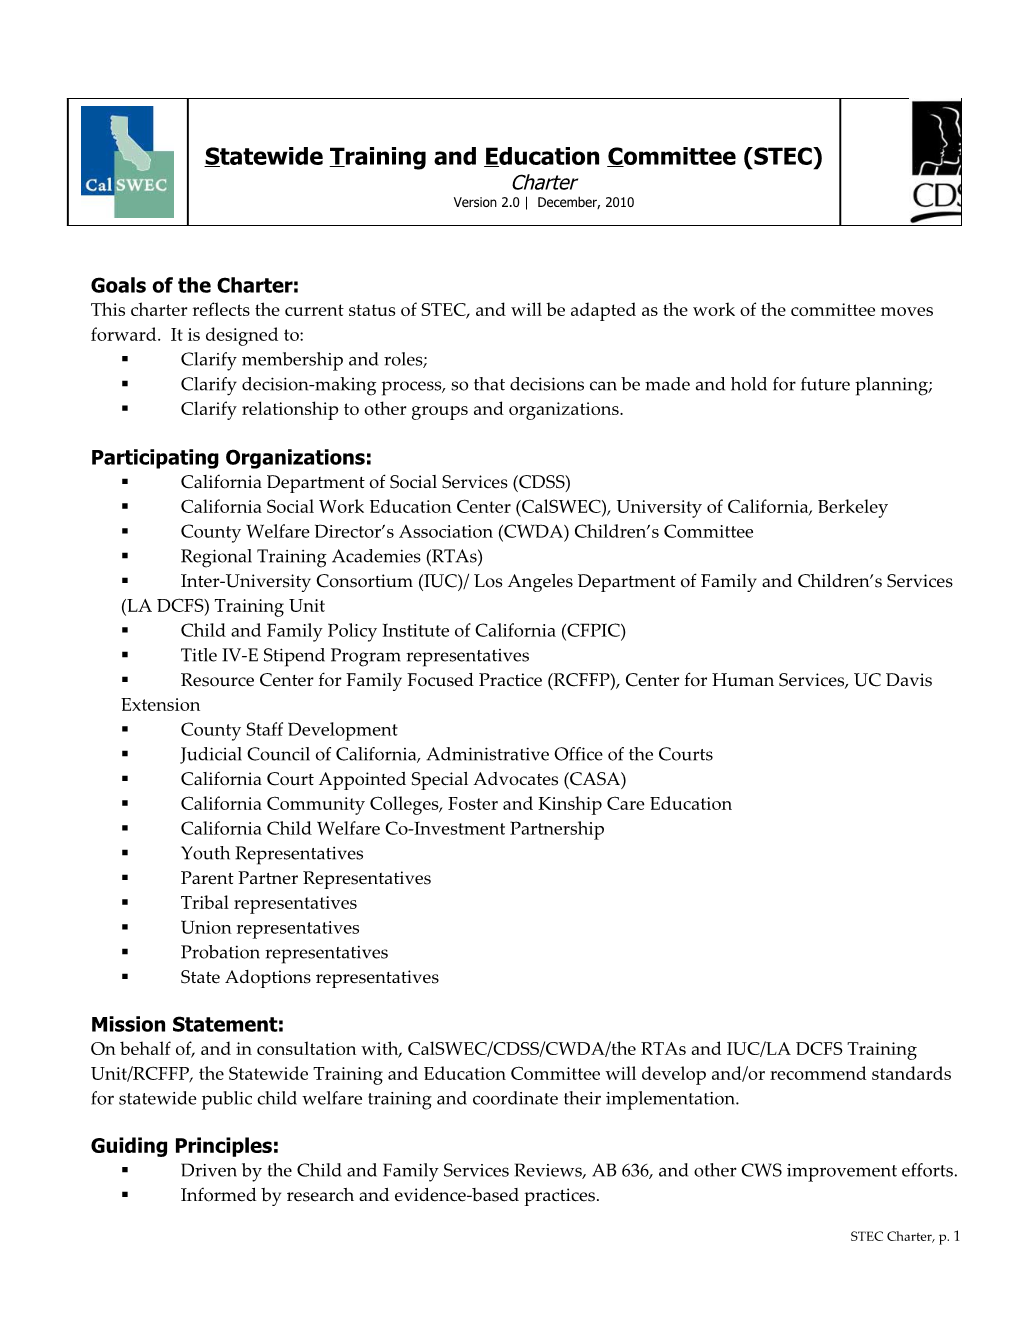 Standardized Core Curriculum Advisory Committee Meeting 9-21-00